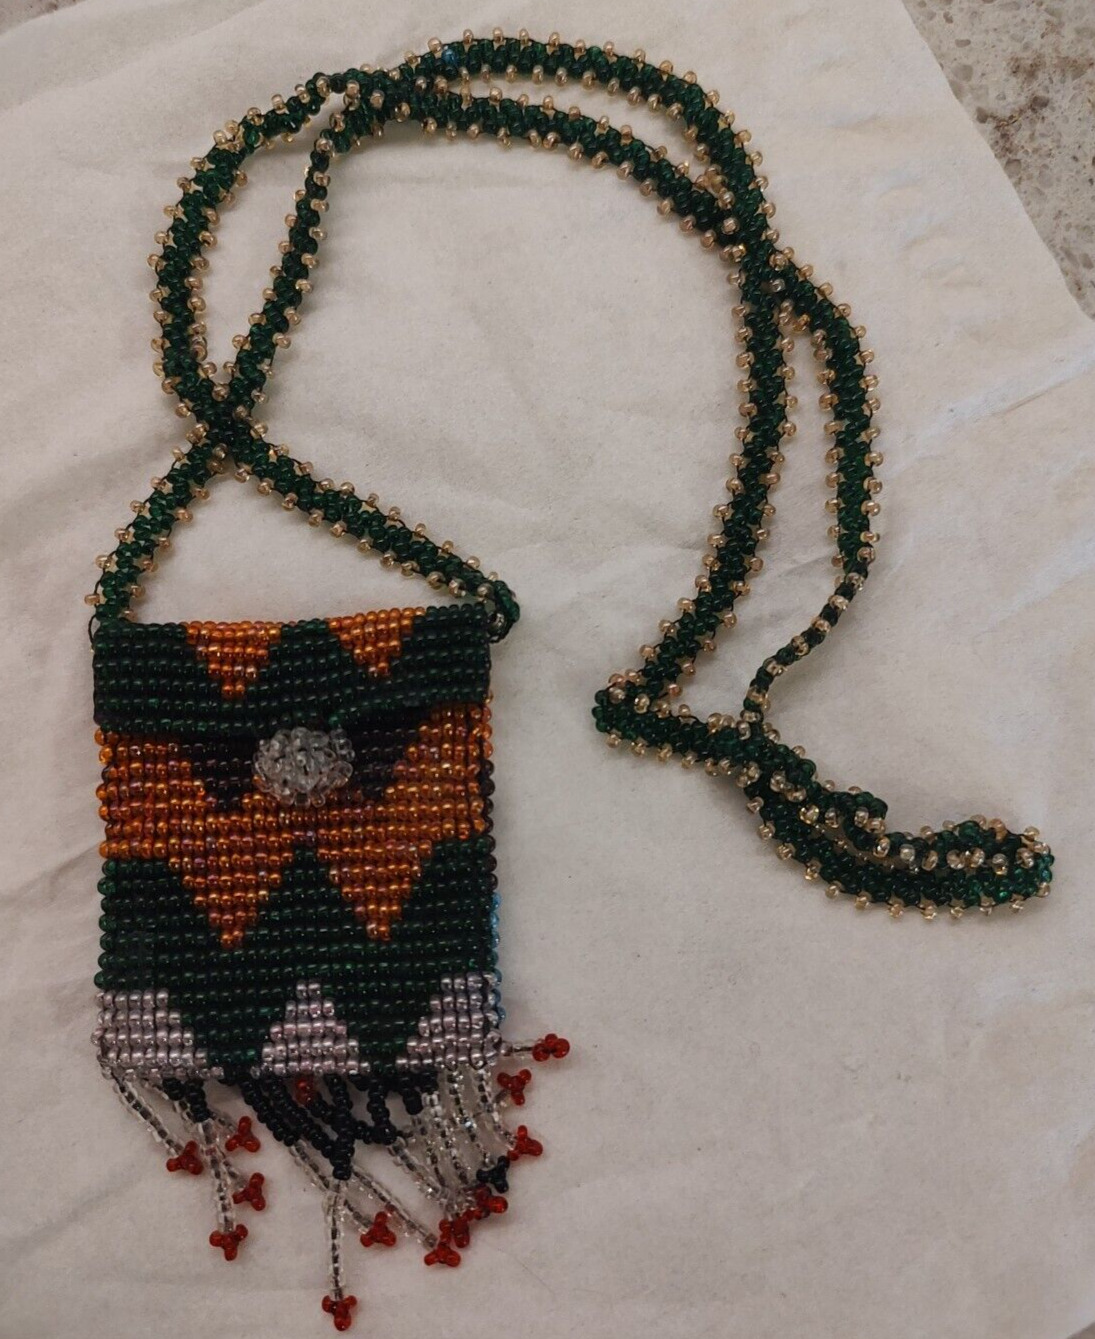 Native American Beaded Medicine Bag/Necklace - Handmade